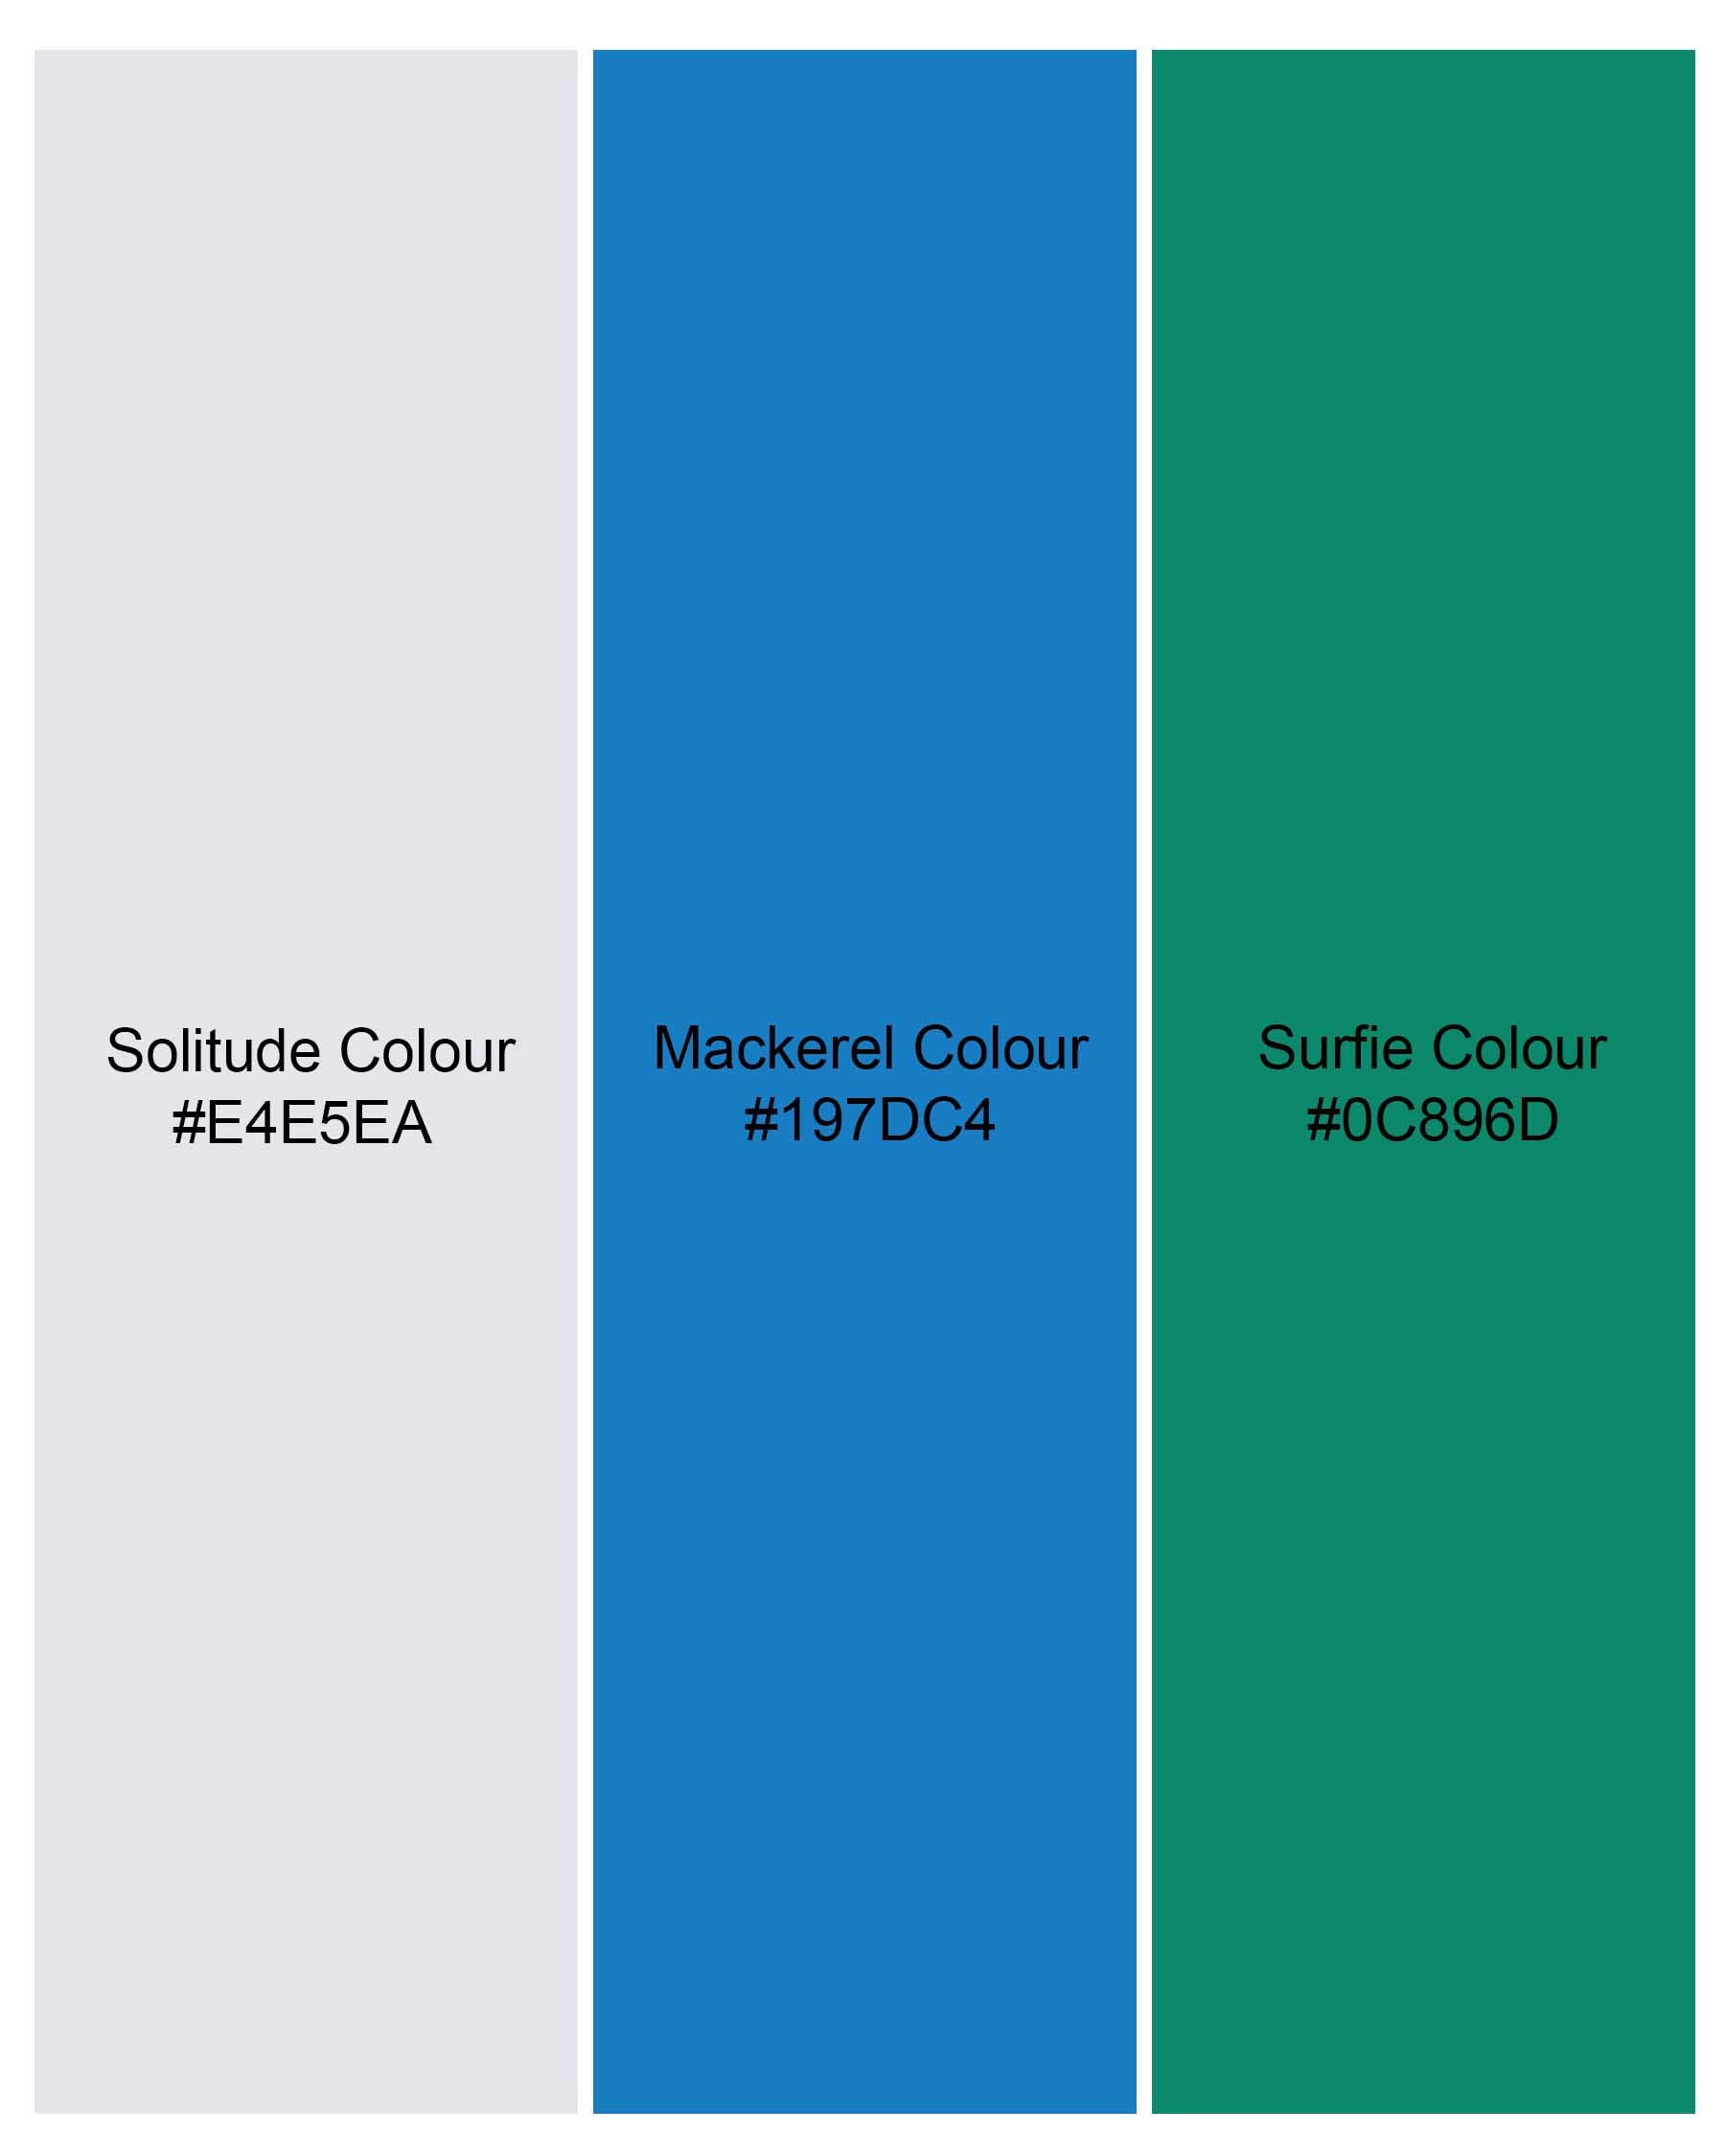 Mackerel Blue and Surfie Green Checkered Herringbone Premium Cotton Shirt 7904-38, 7904-H-38, 7904-39, 7904-H-39, 7904-40, 7904-H-40, 7904-42, 7904-H-42, 7904-44, 7904-H-44, 7904-46, 7904-H-46, 7904-48, 7904-H-48, 7904-50, 7904-H-50, 7904-52, 7904-H-52